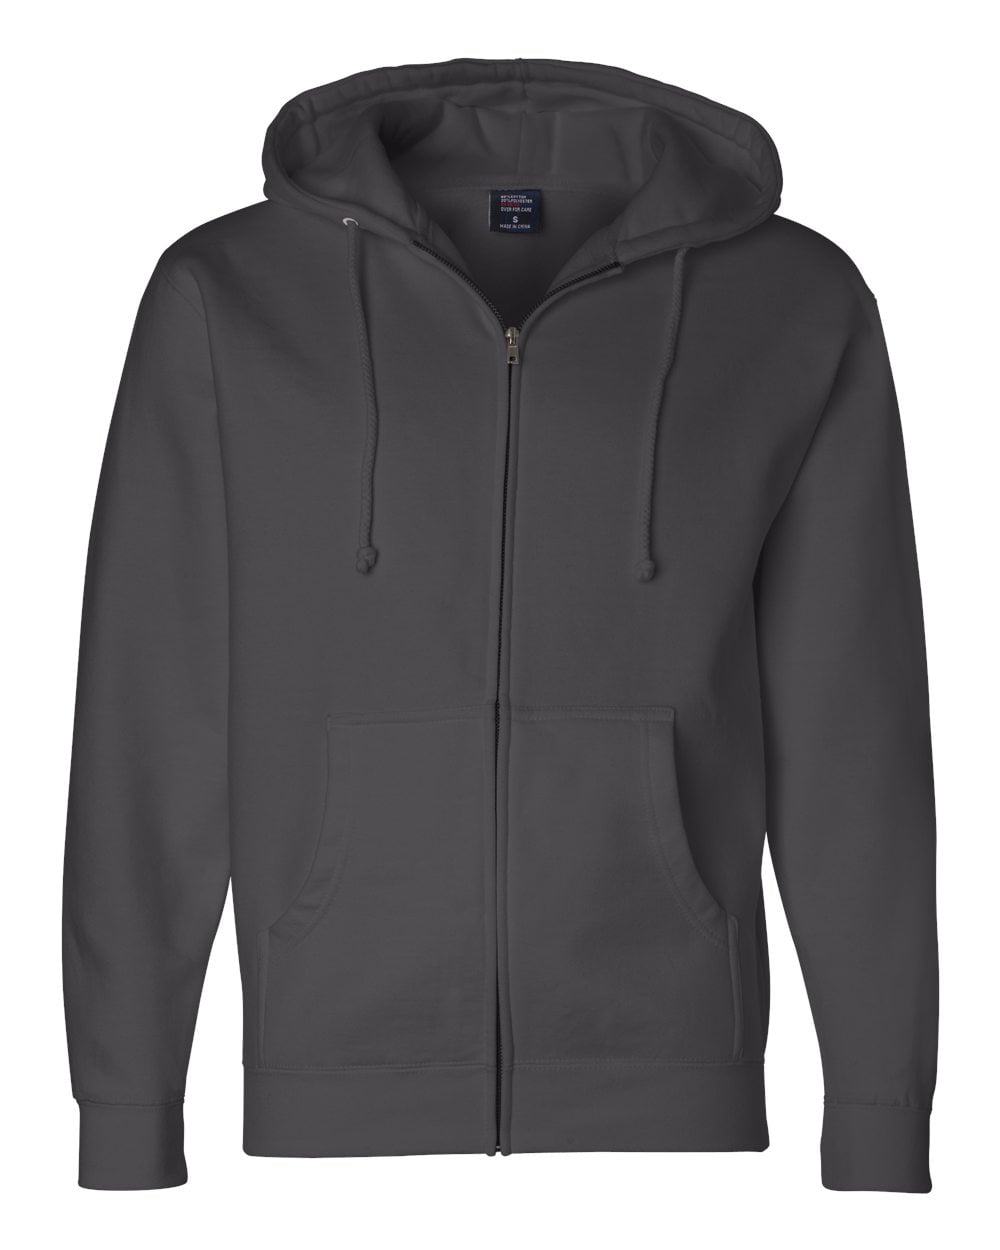 ITC IND4000Z Men's Full-Zip Hooded Sweatshirt - Solid Charcoal - Small ...